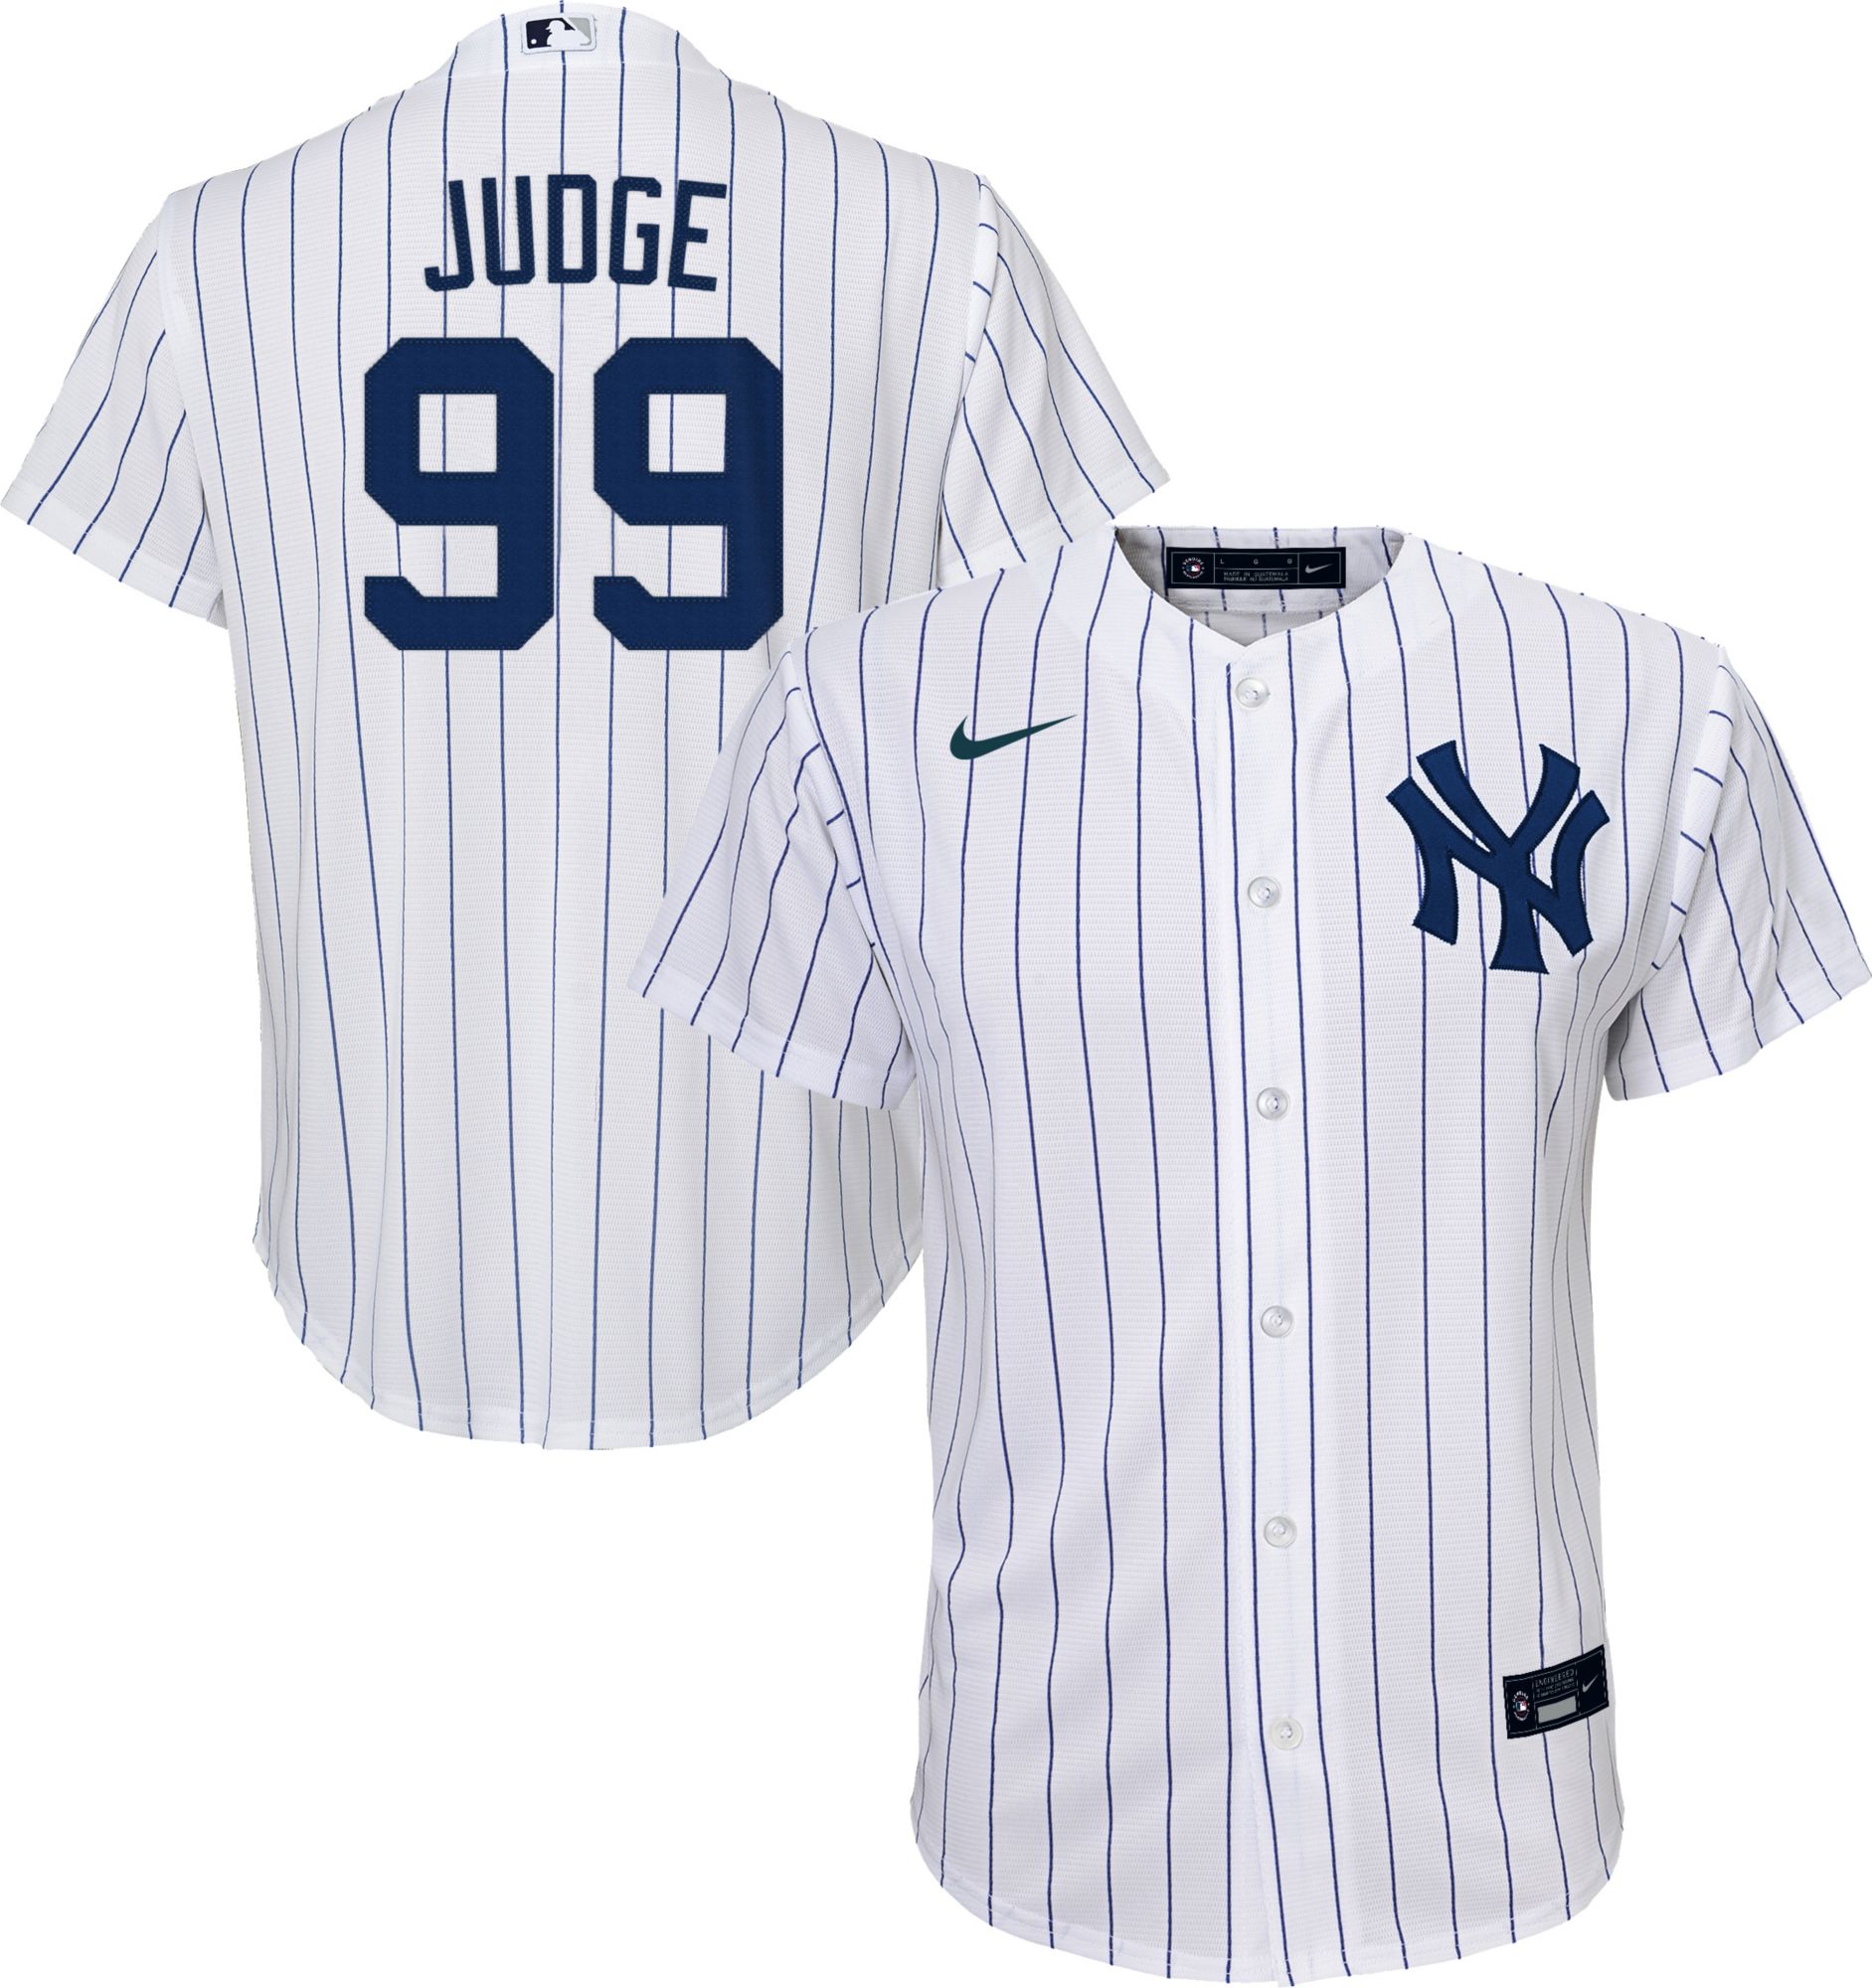 99 judge jersey